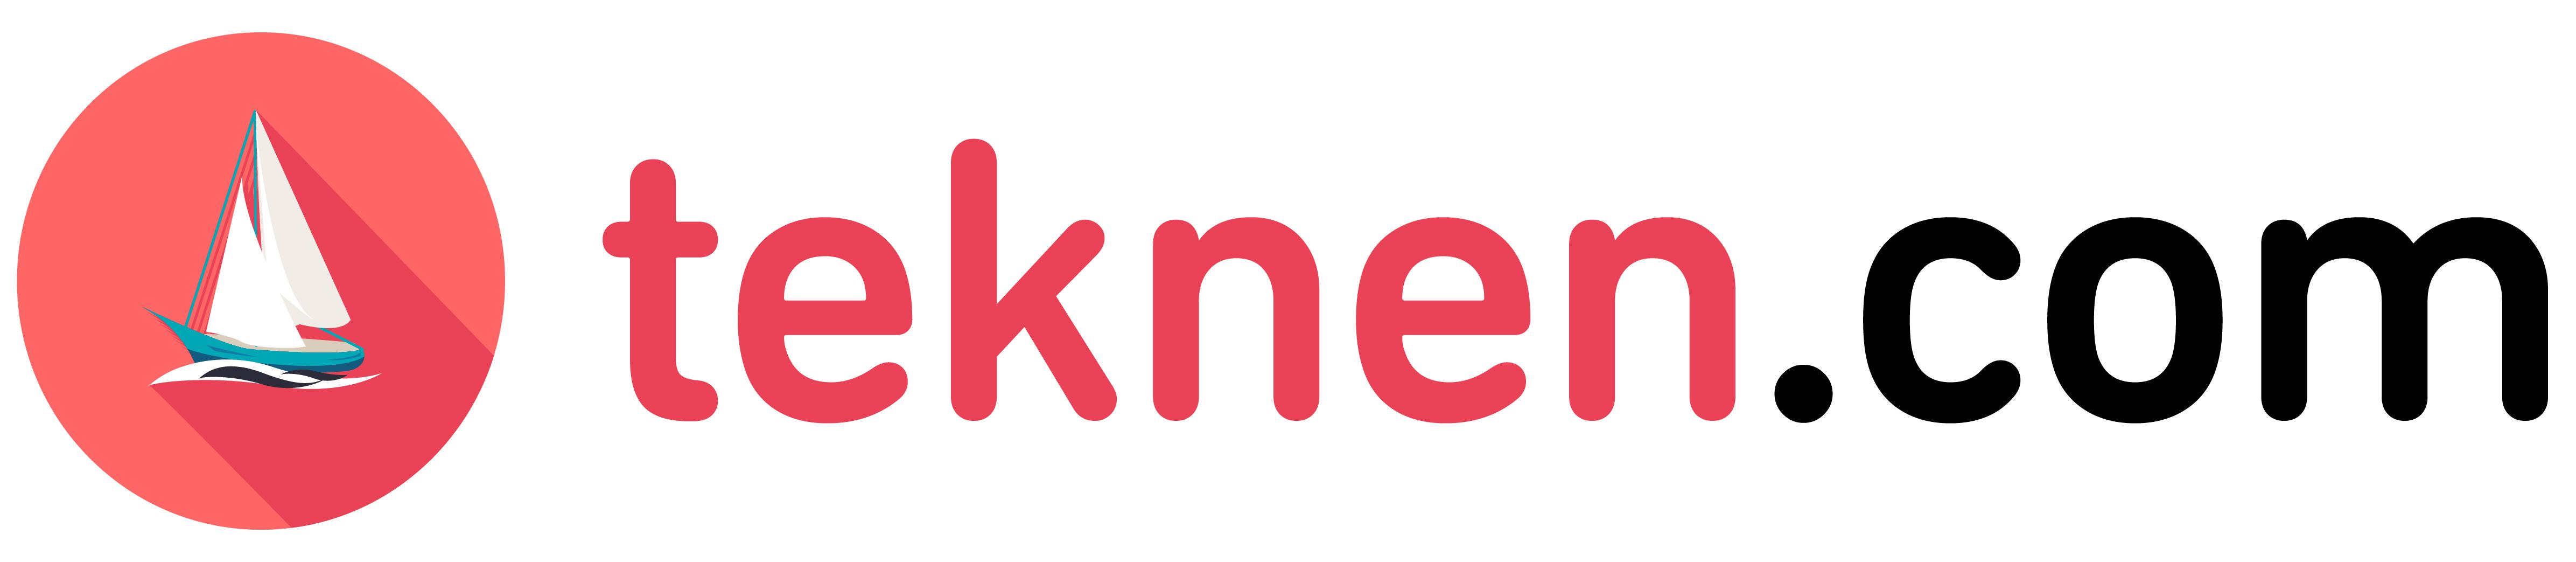 Teknen.com Logo